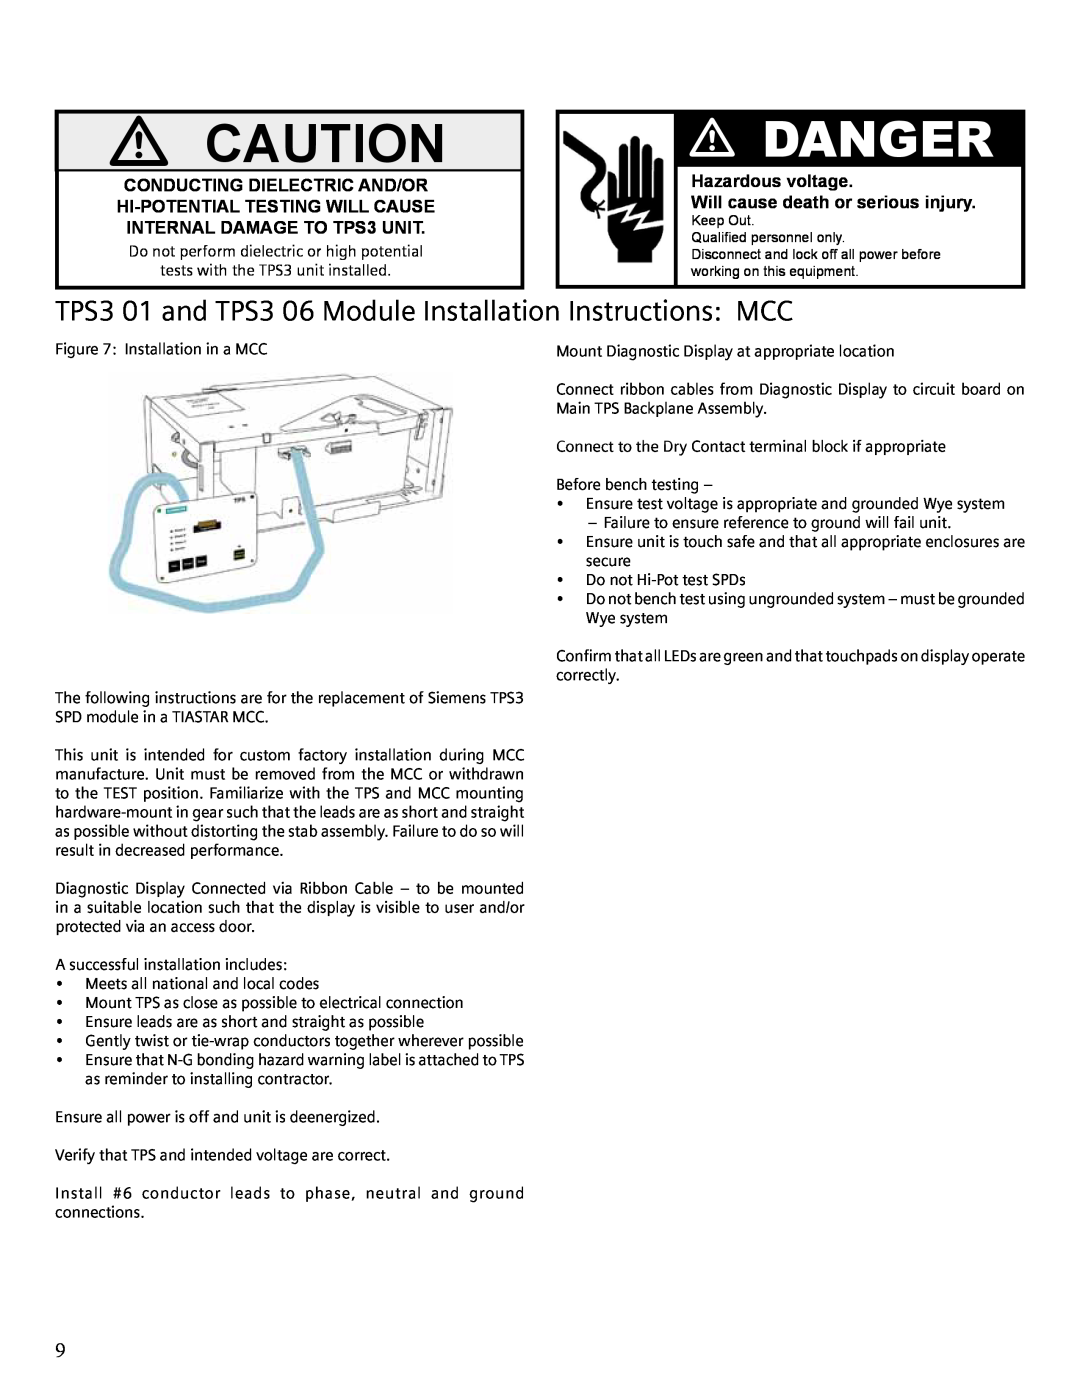 Siemens user manual TPS3 01 and TPS3 06 Module Installation Instructions MCC, V Caution, V Danger 